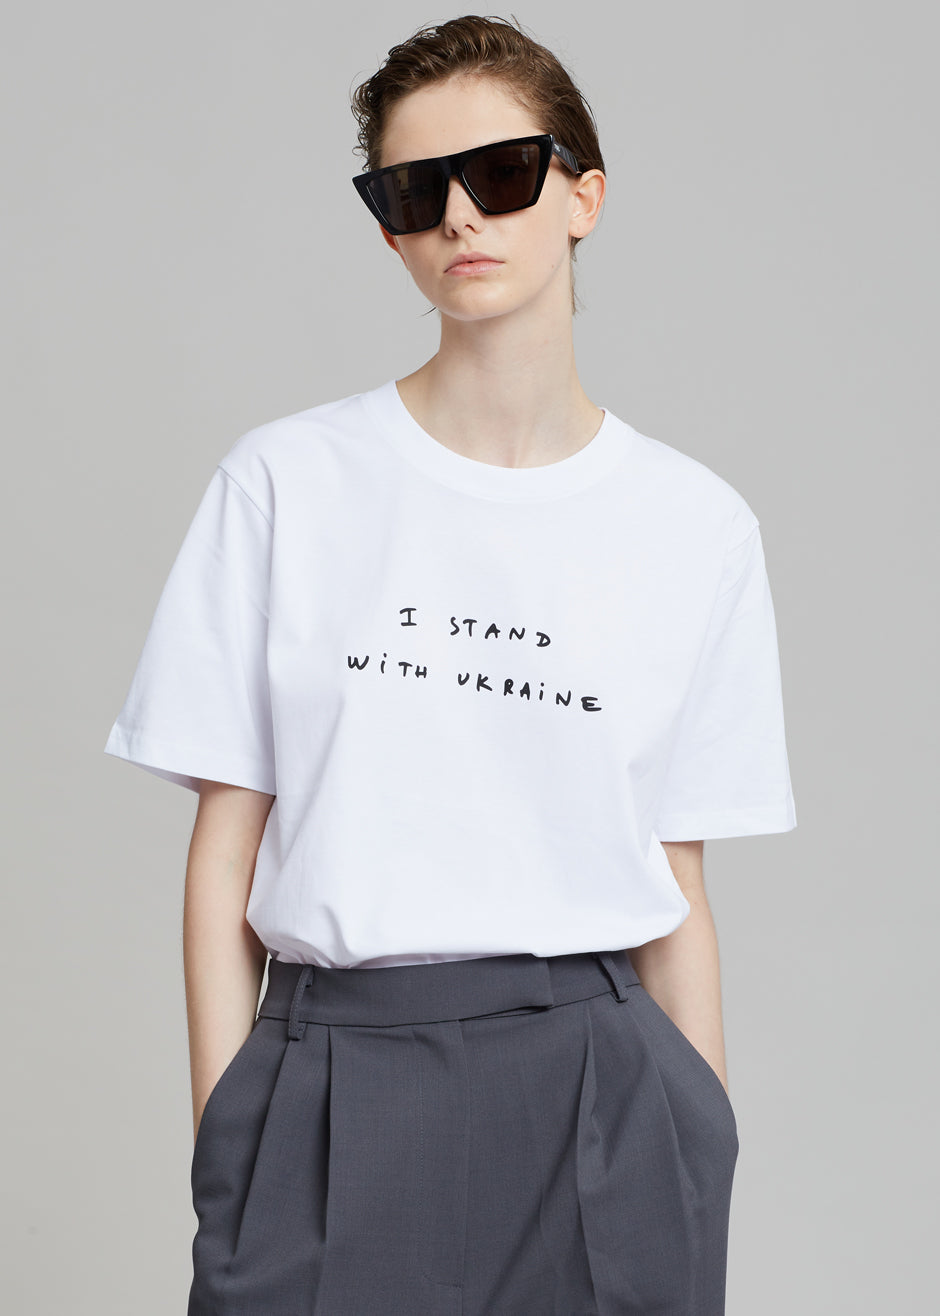 The Frankie Shop x Thomas Lélu Stand T-Shirt - White/Black - 4